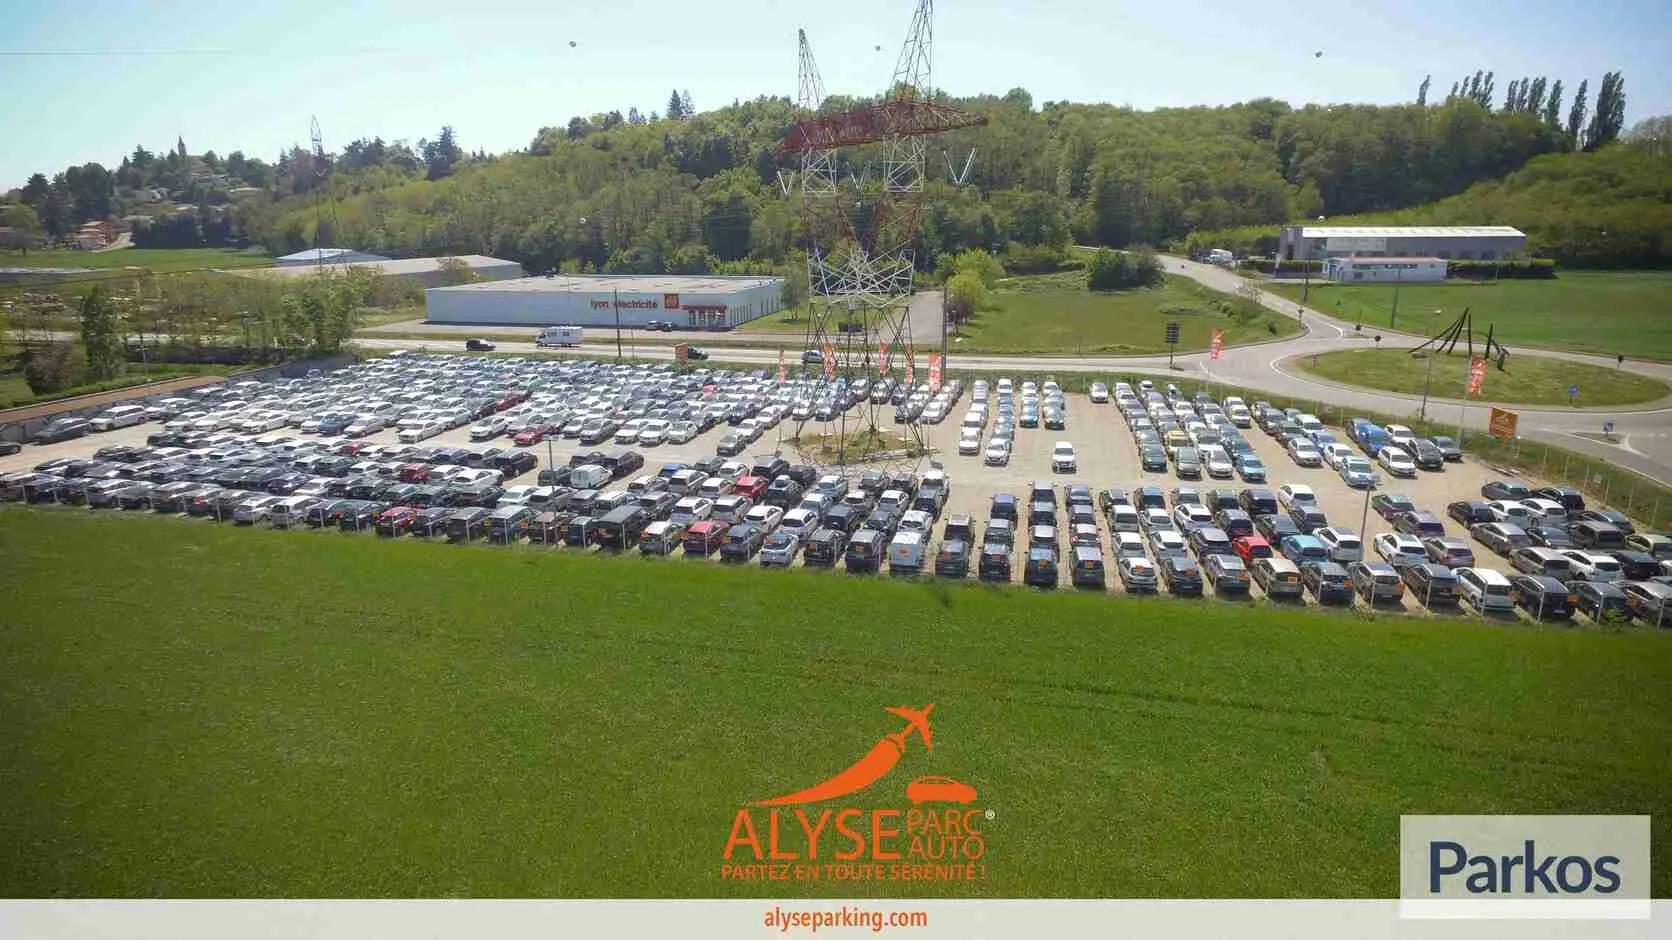 Alyse Parc Auto Toulouse - Toulouse Airport Parking - picture 1